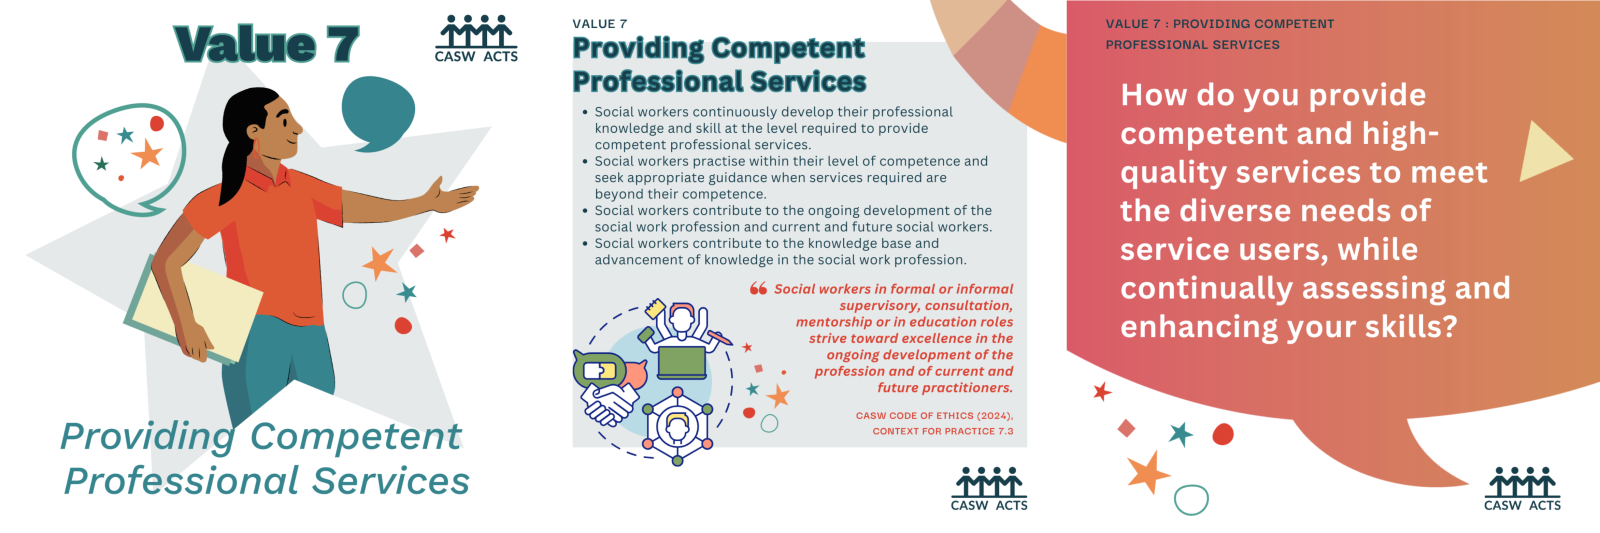 Value 7: Providing Competent Professional Services